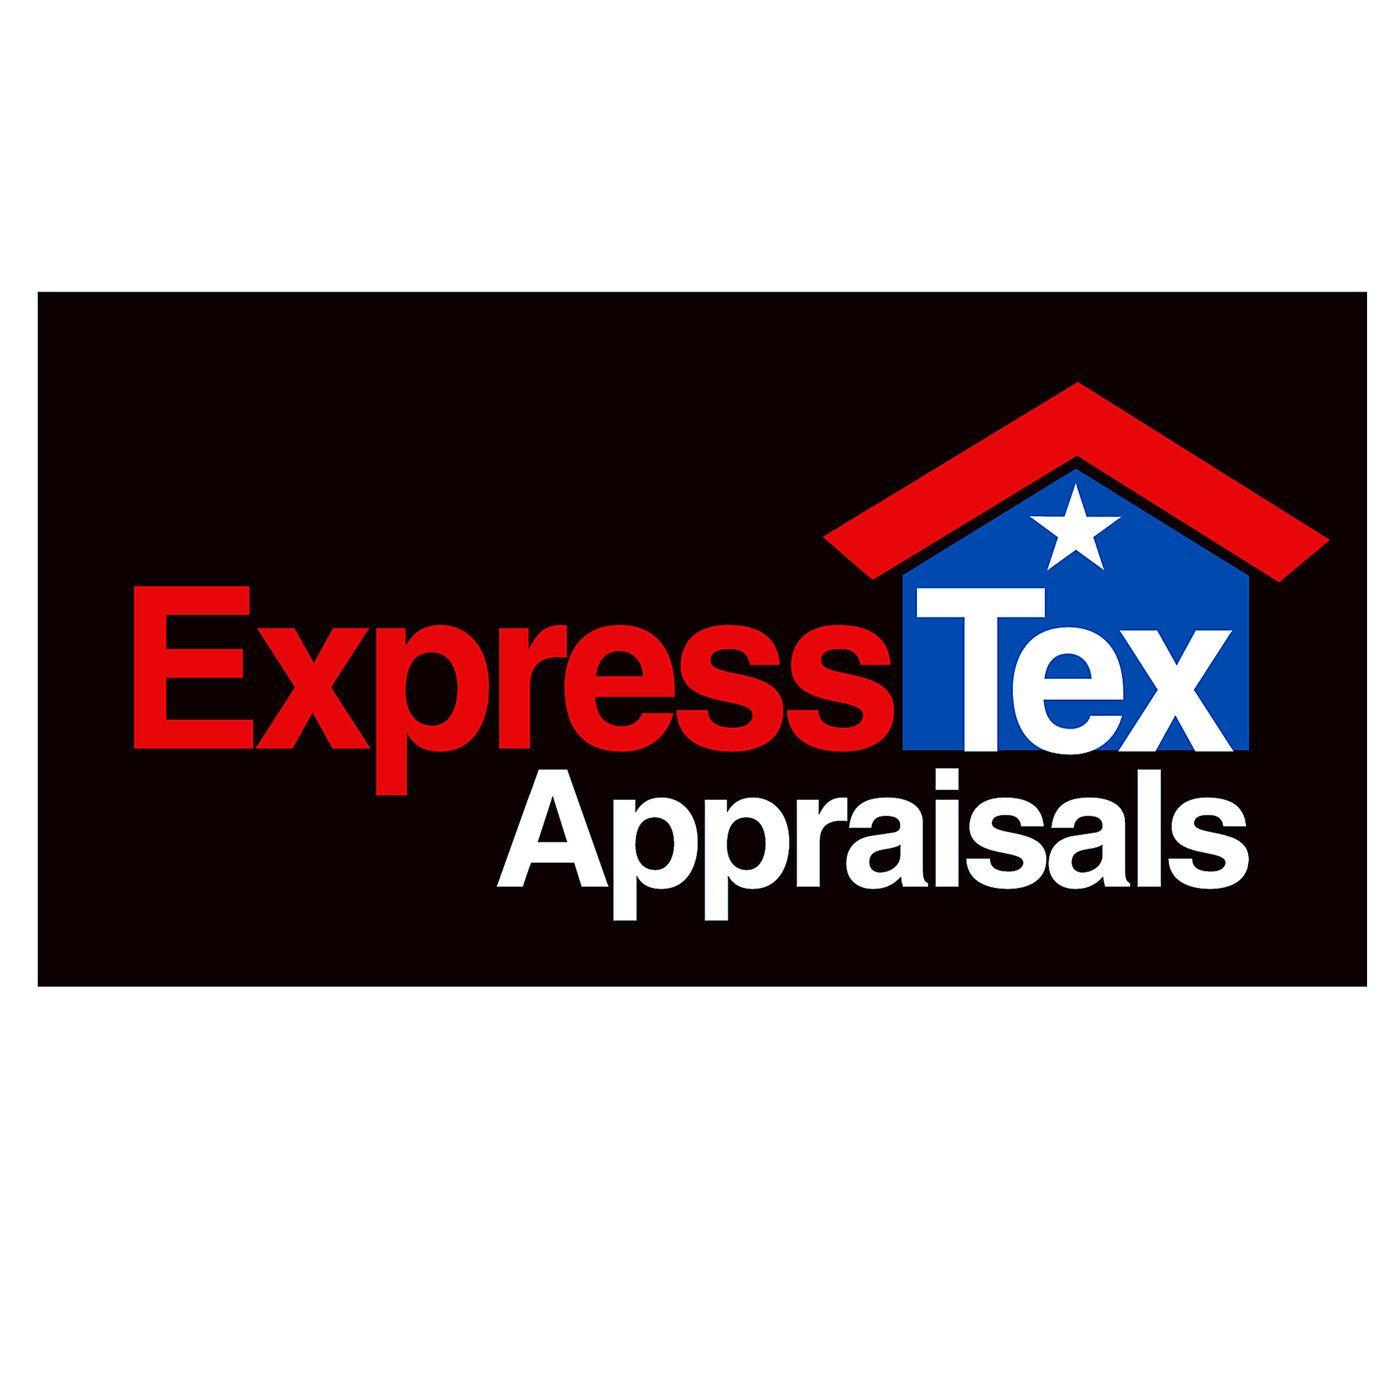 Tex Logo - Express Tex Appraisal Team by Kym Merrill at Coroflot.com